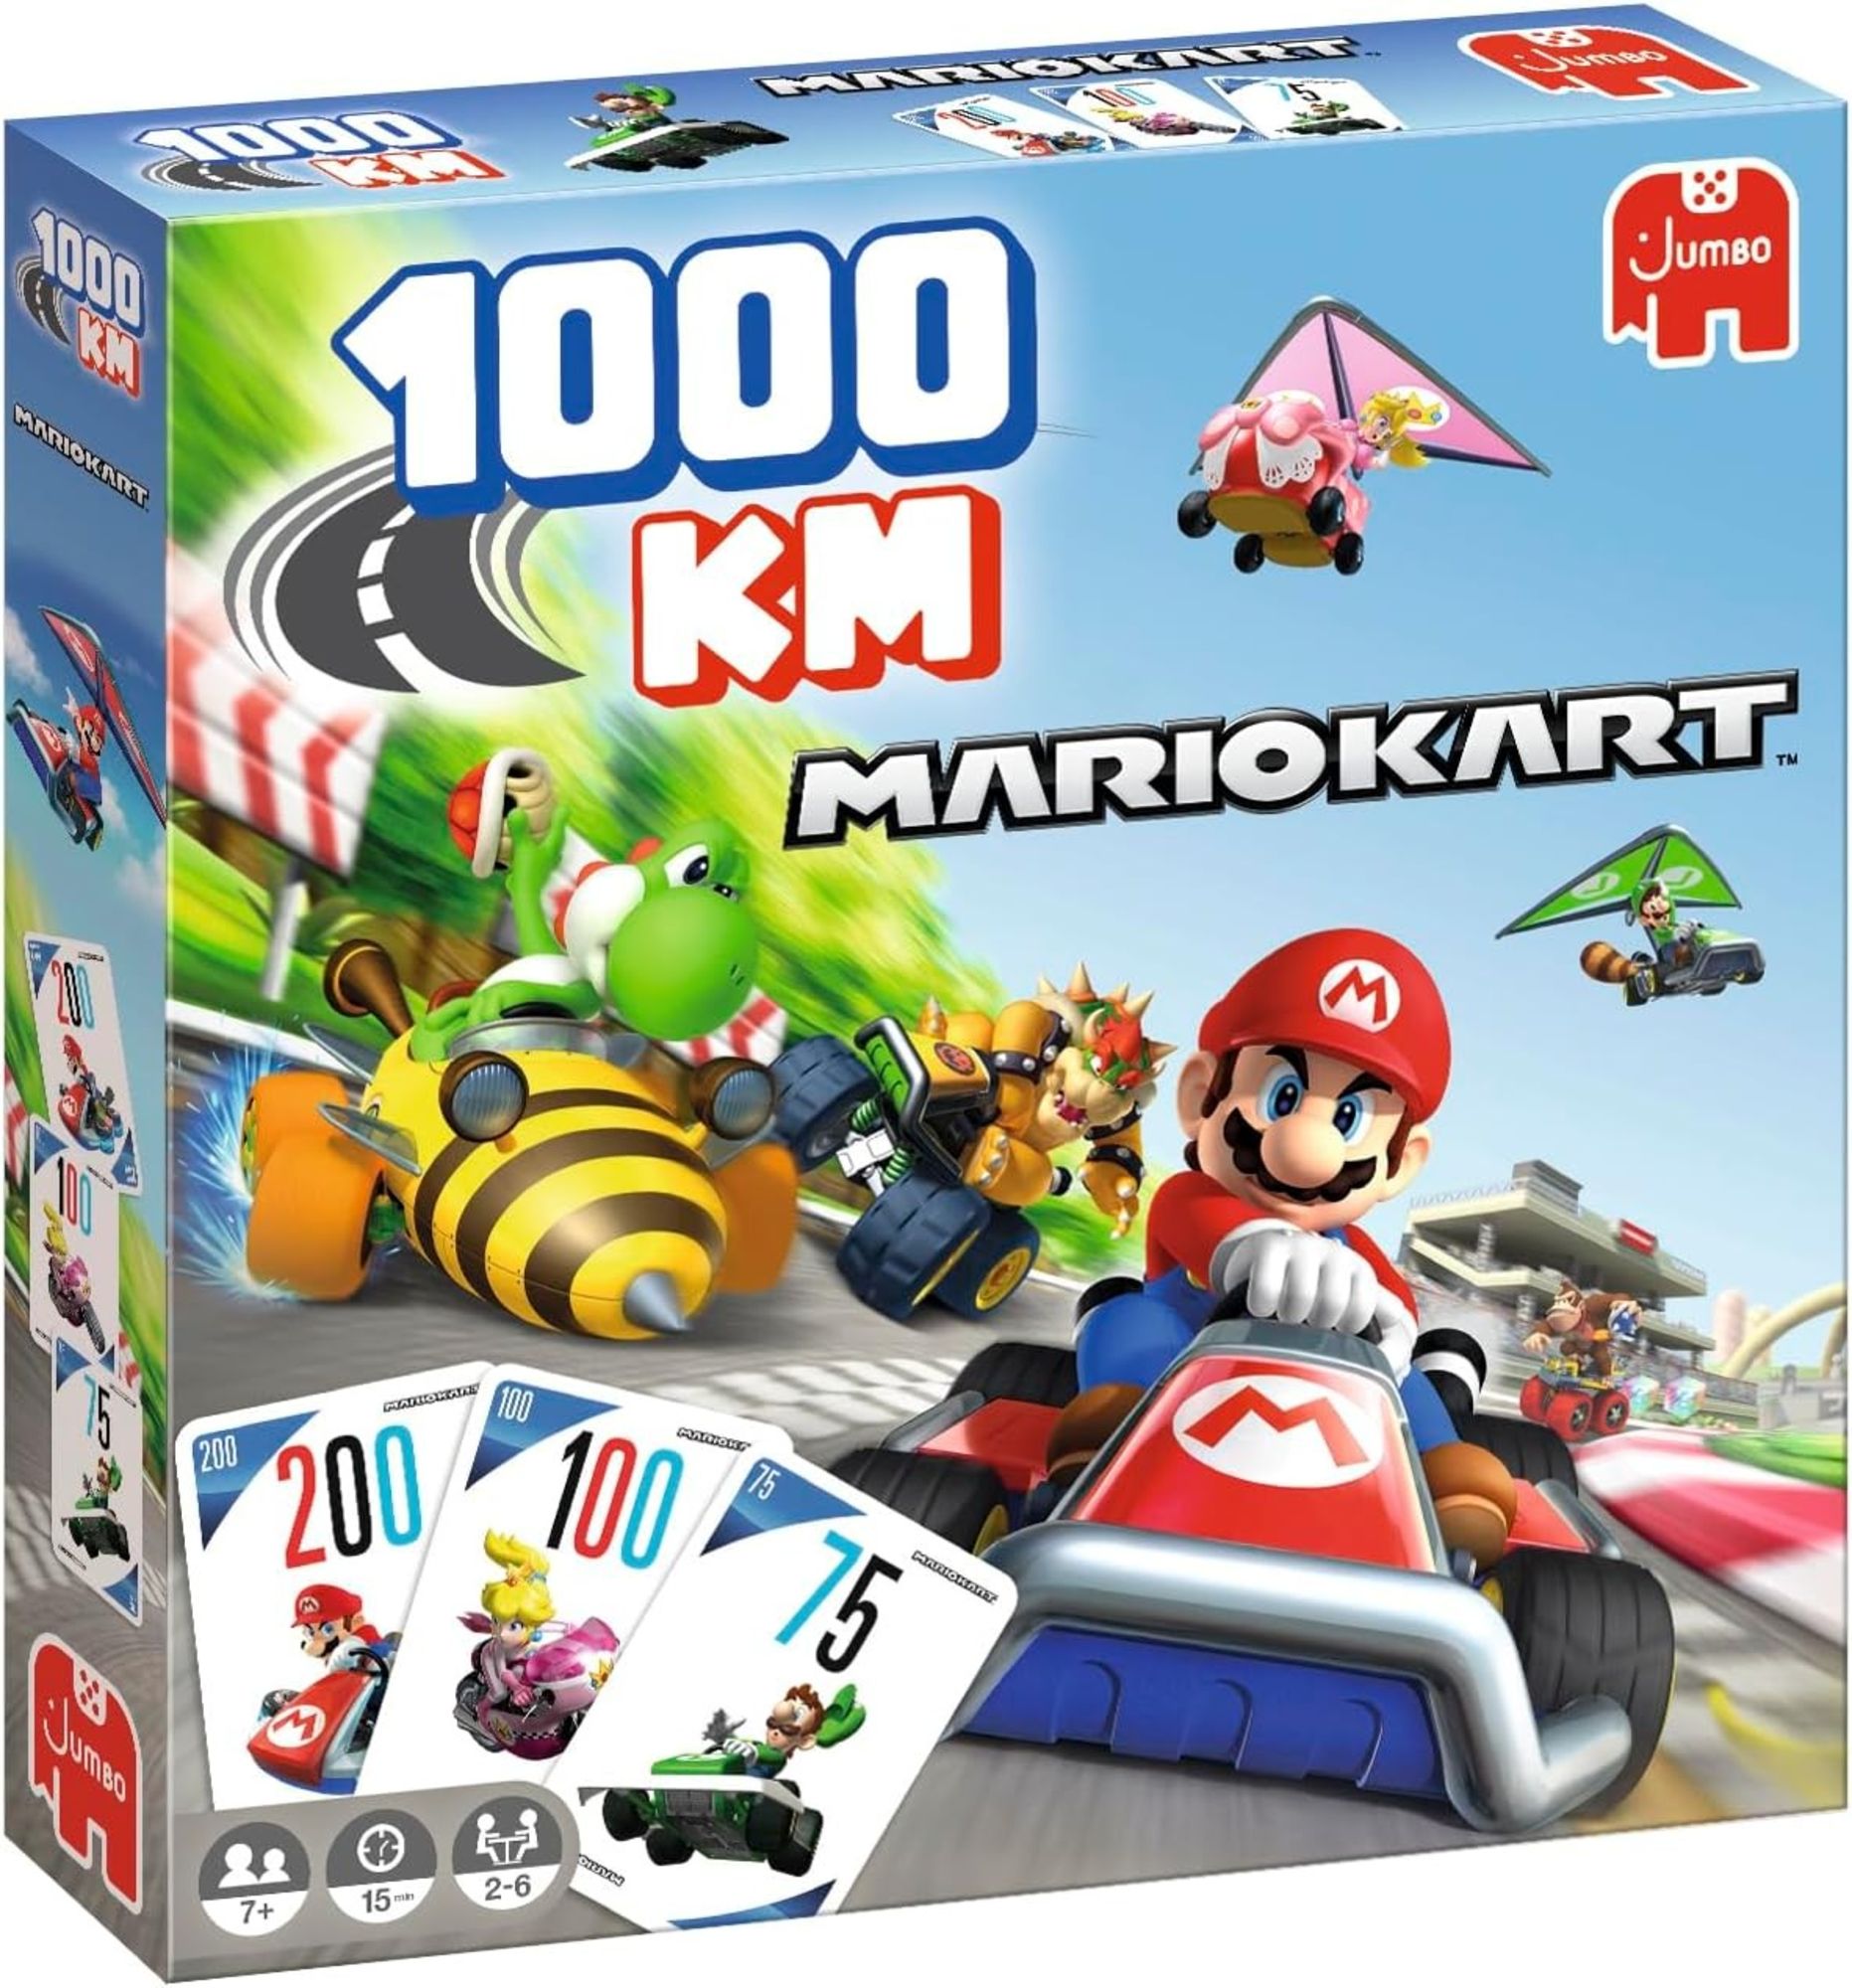 Jumbo Spiele - 1000KM Mario Kart' kaufen - Spielwaren